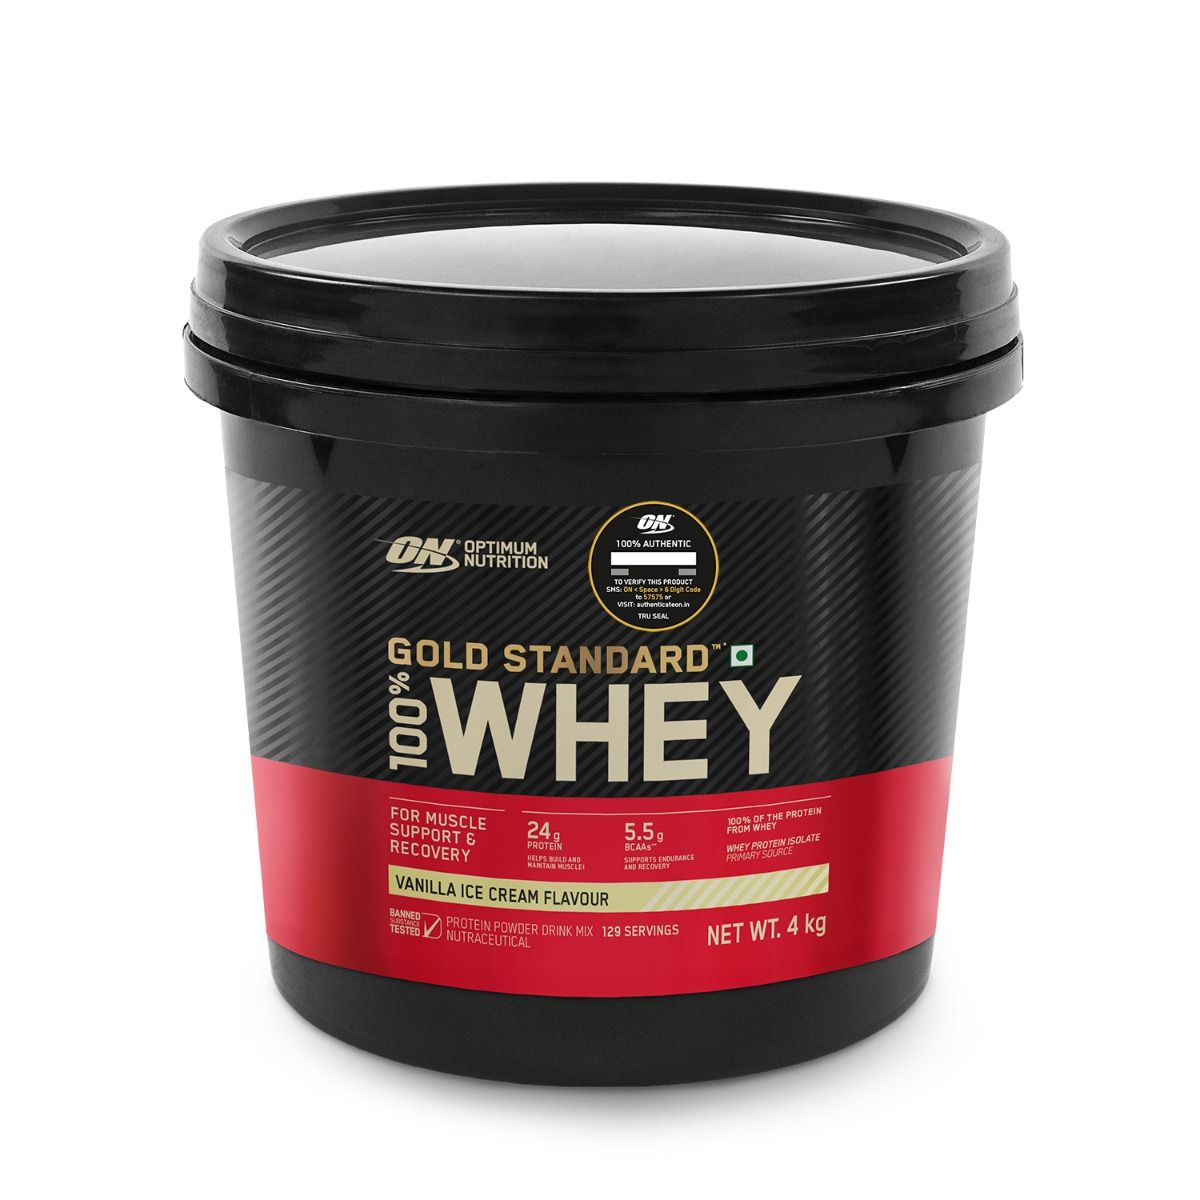 Optimum Nutrition (ON) Gold Standard 100% Whey Protein Vanilla Ice Cream Flavour Powder, 4 Kg, Pack of 1 